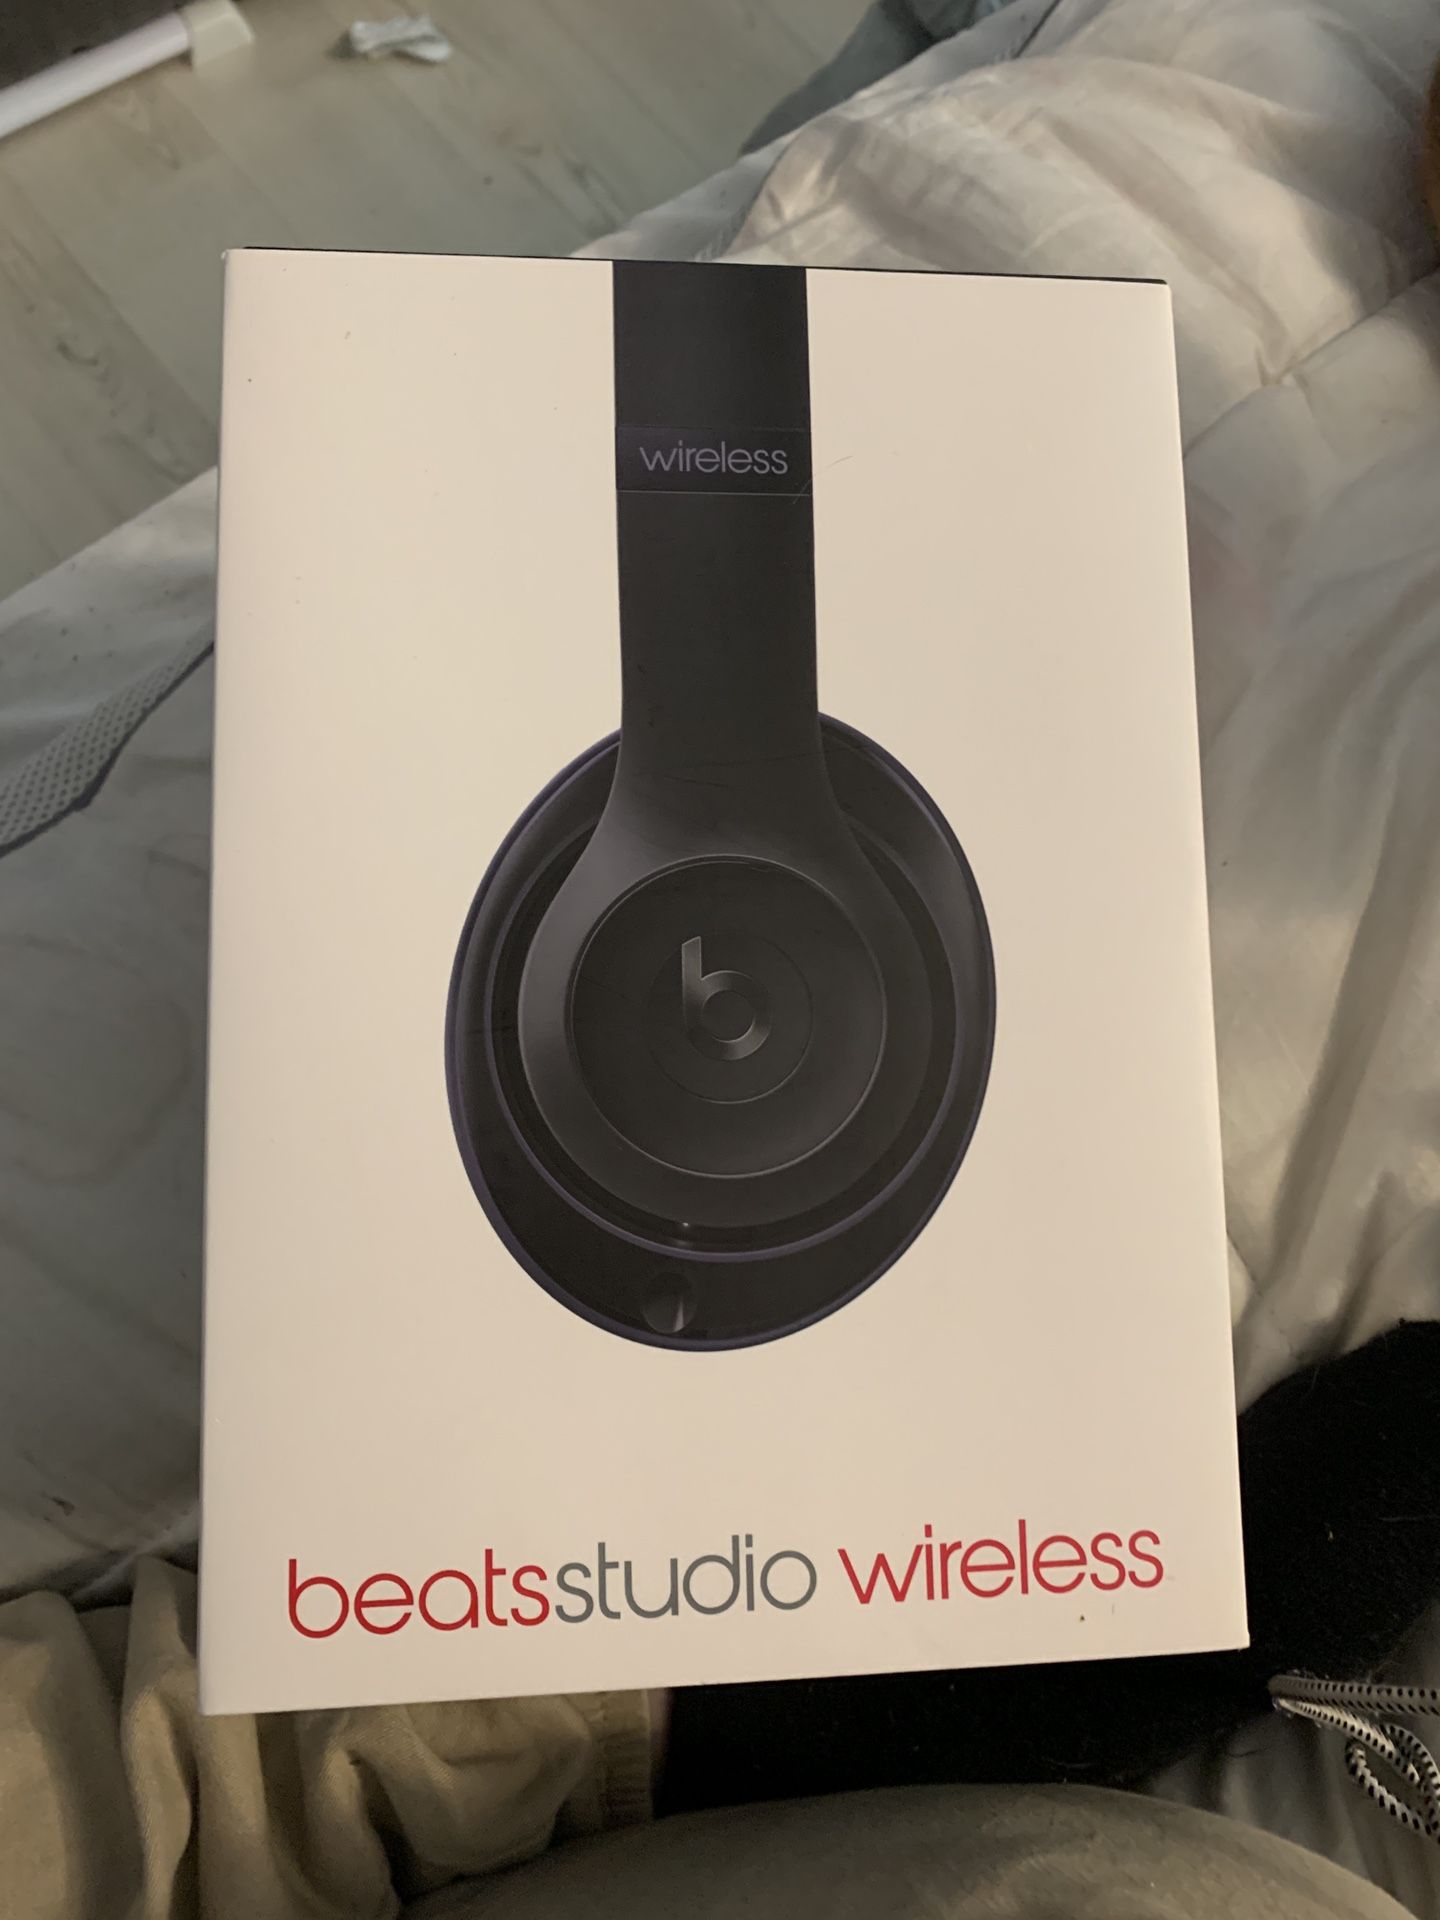 Beat by Dre wireless studio headphones